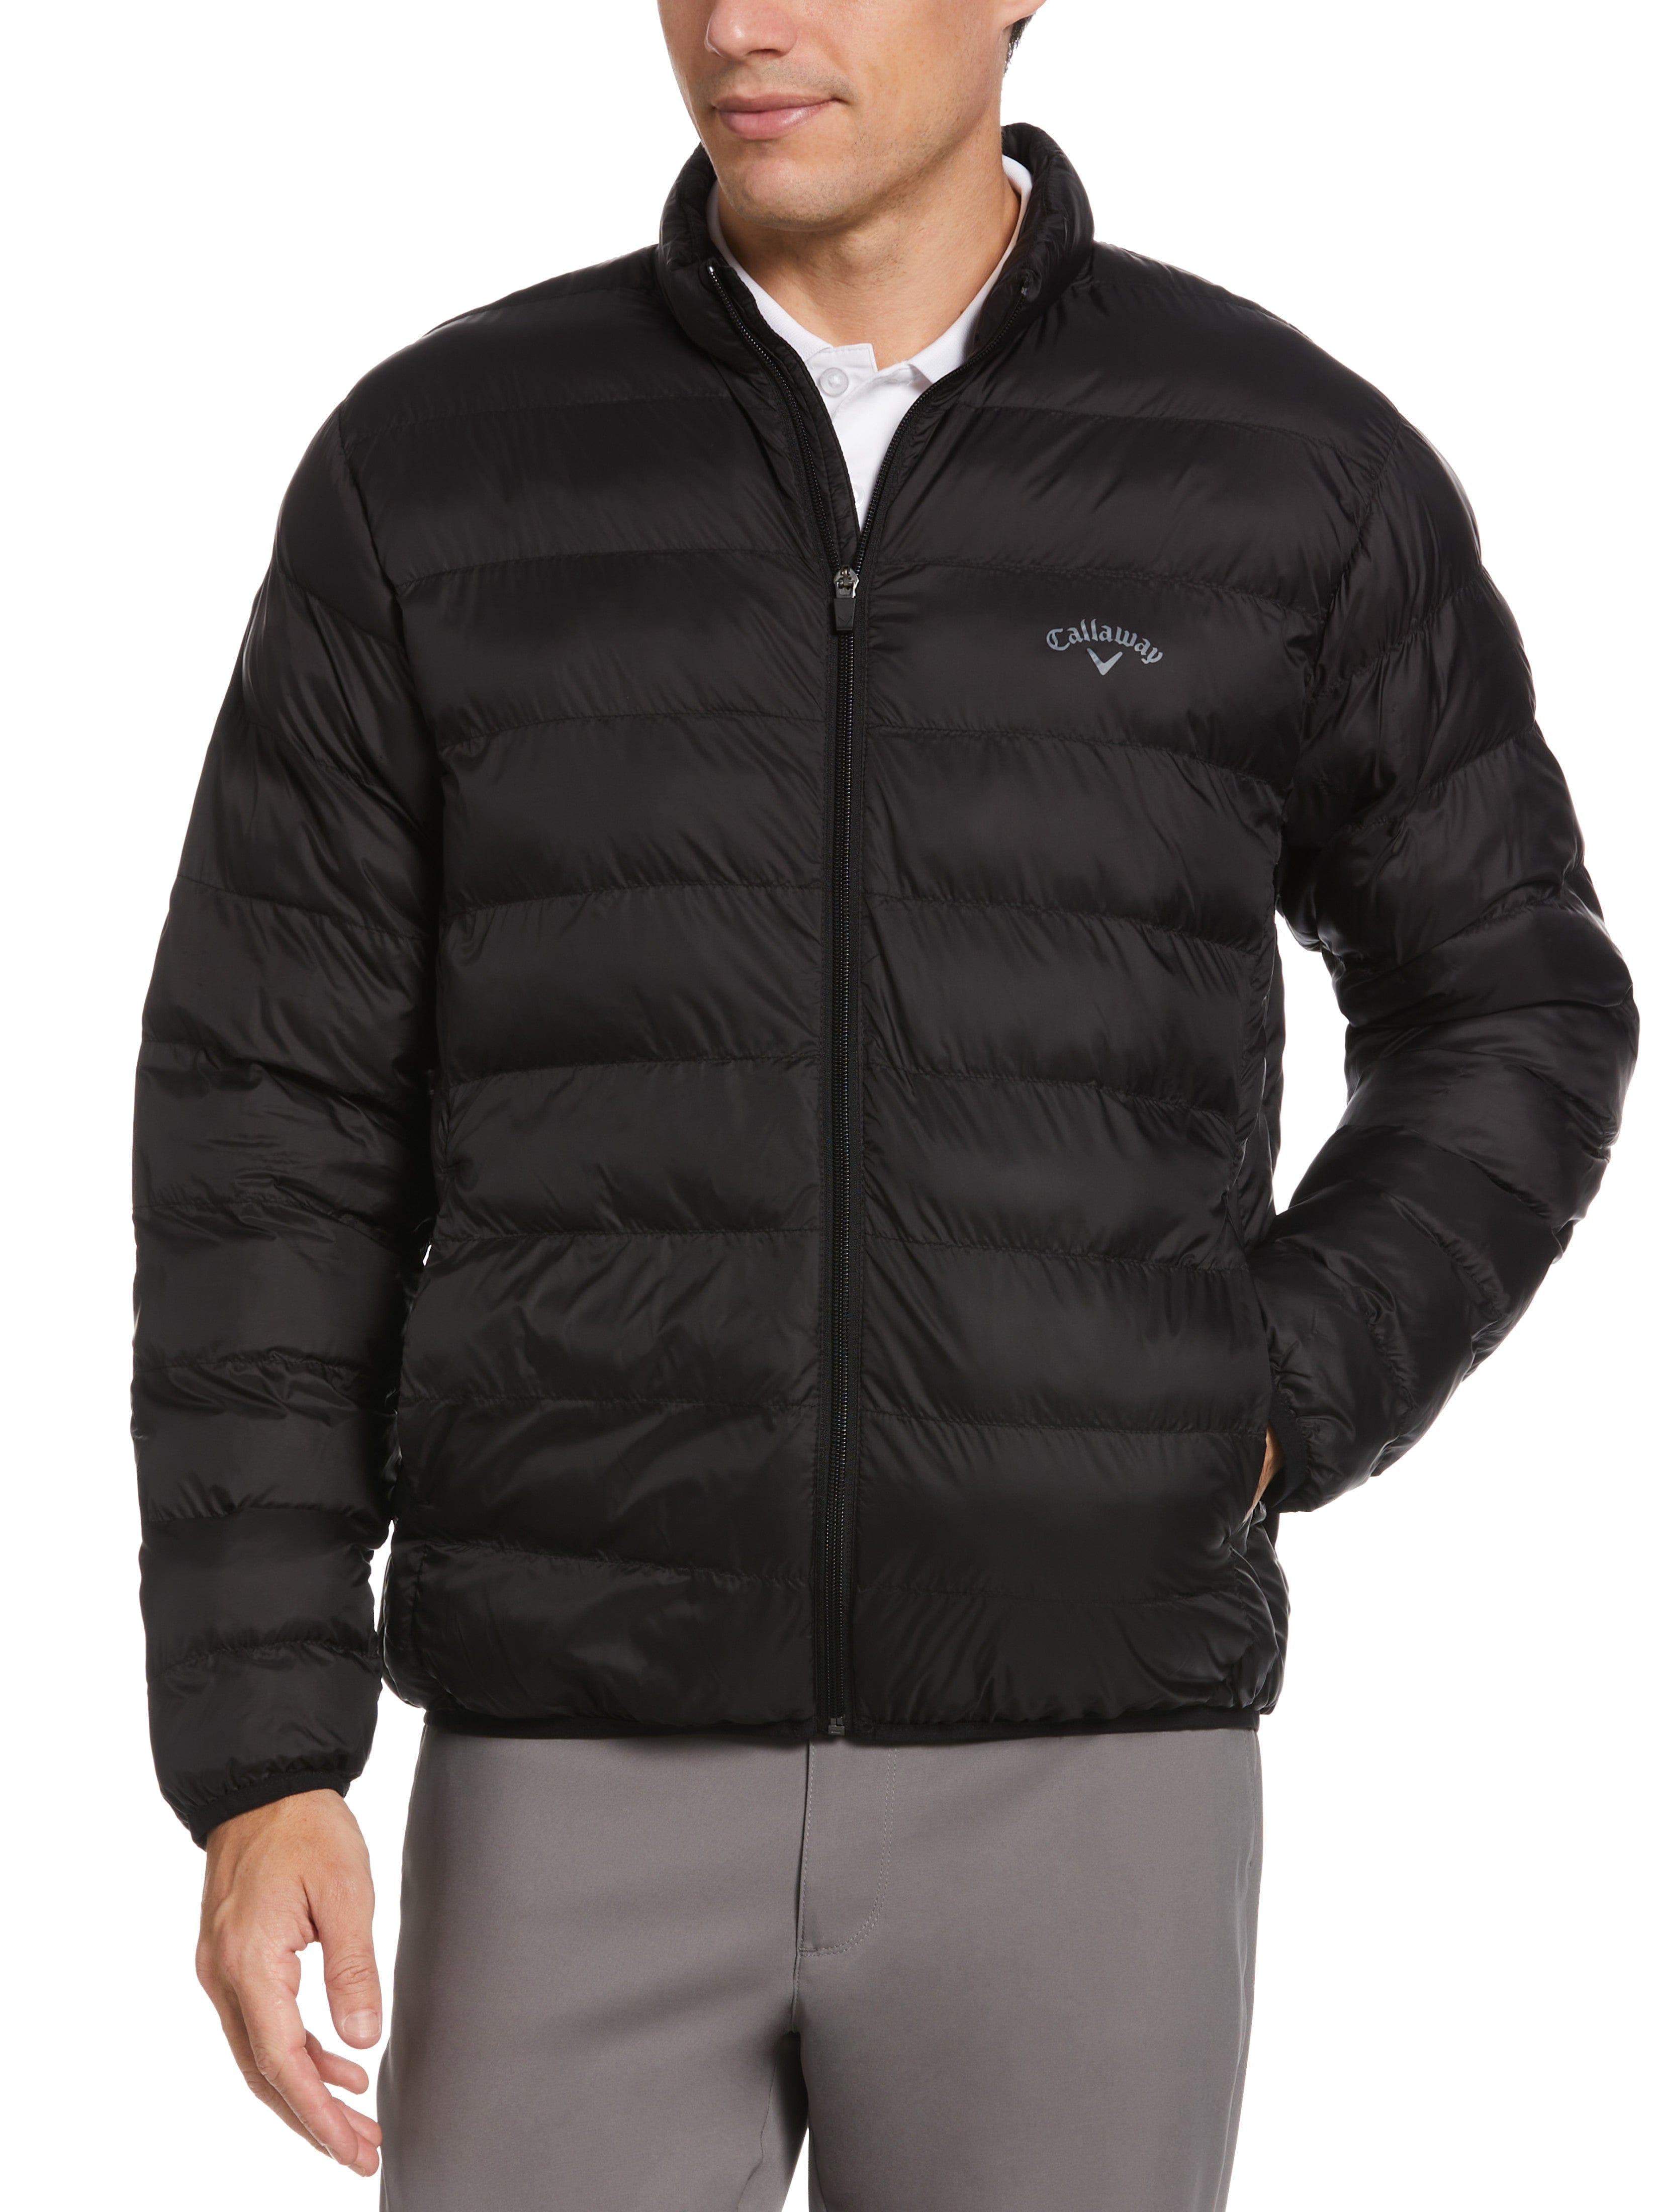 Callaway Apparel Mens Puffer Jacket Top, Size 3XL, Black, 100% Nylon | Golf Apparel Shop